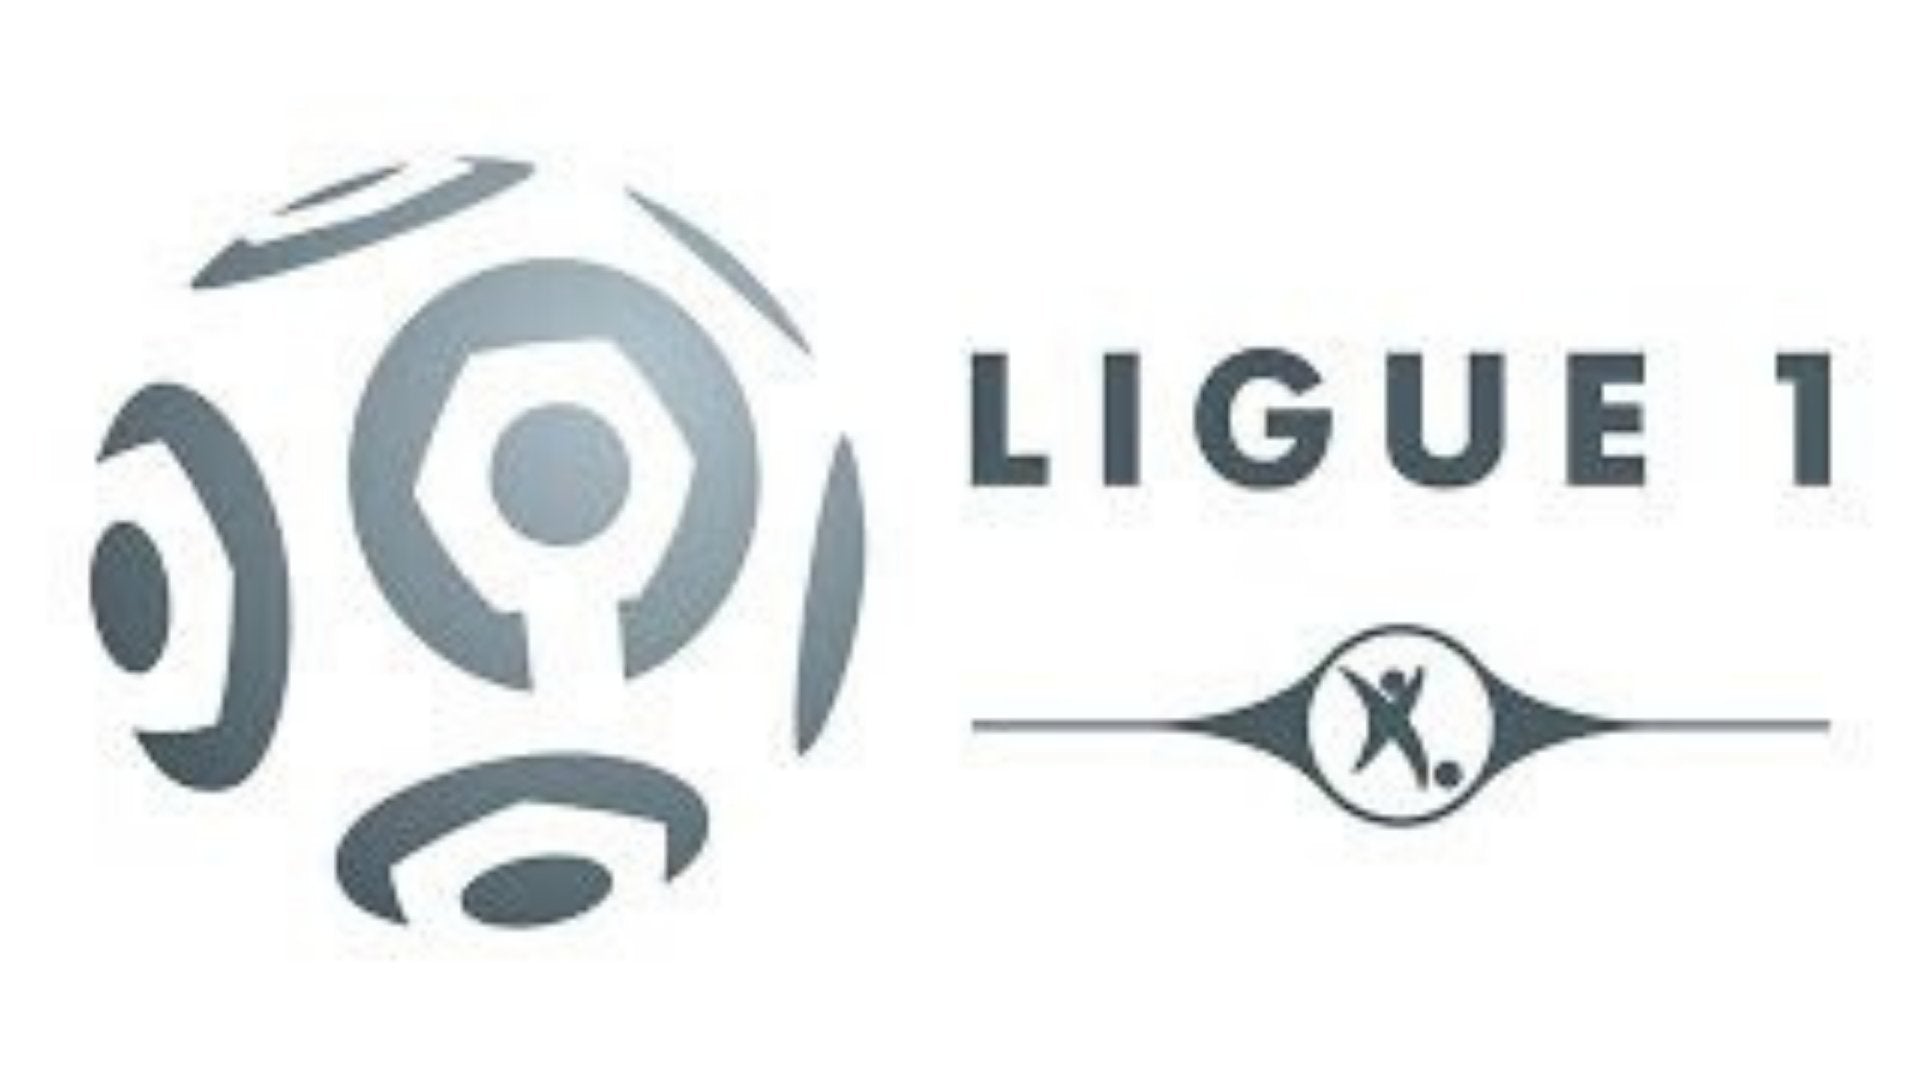 France League - uaessss